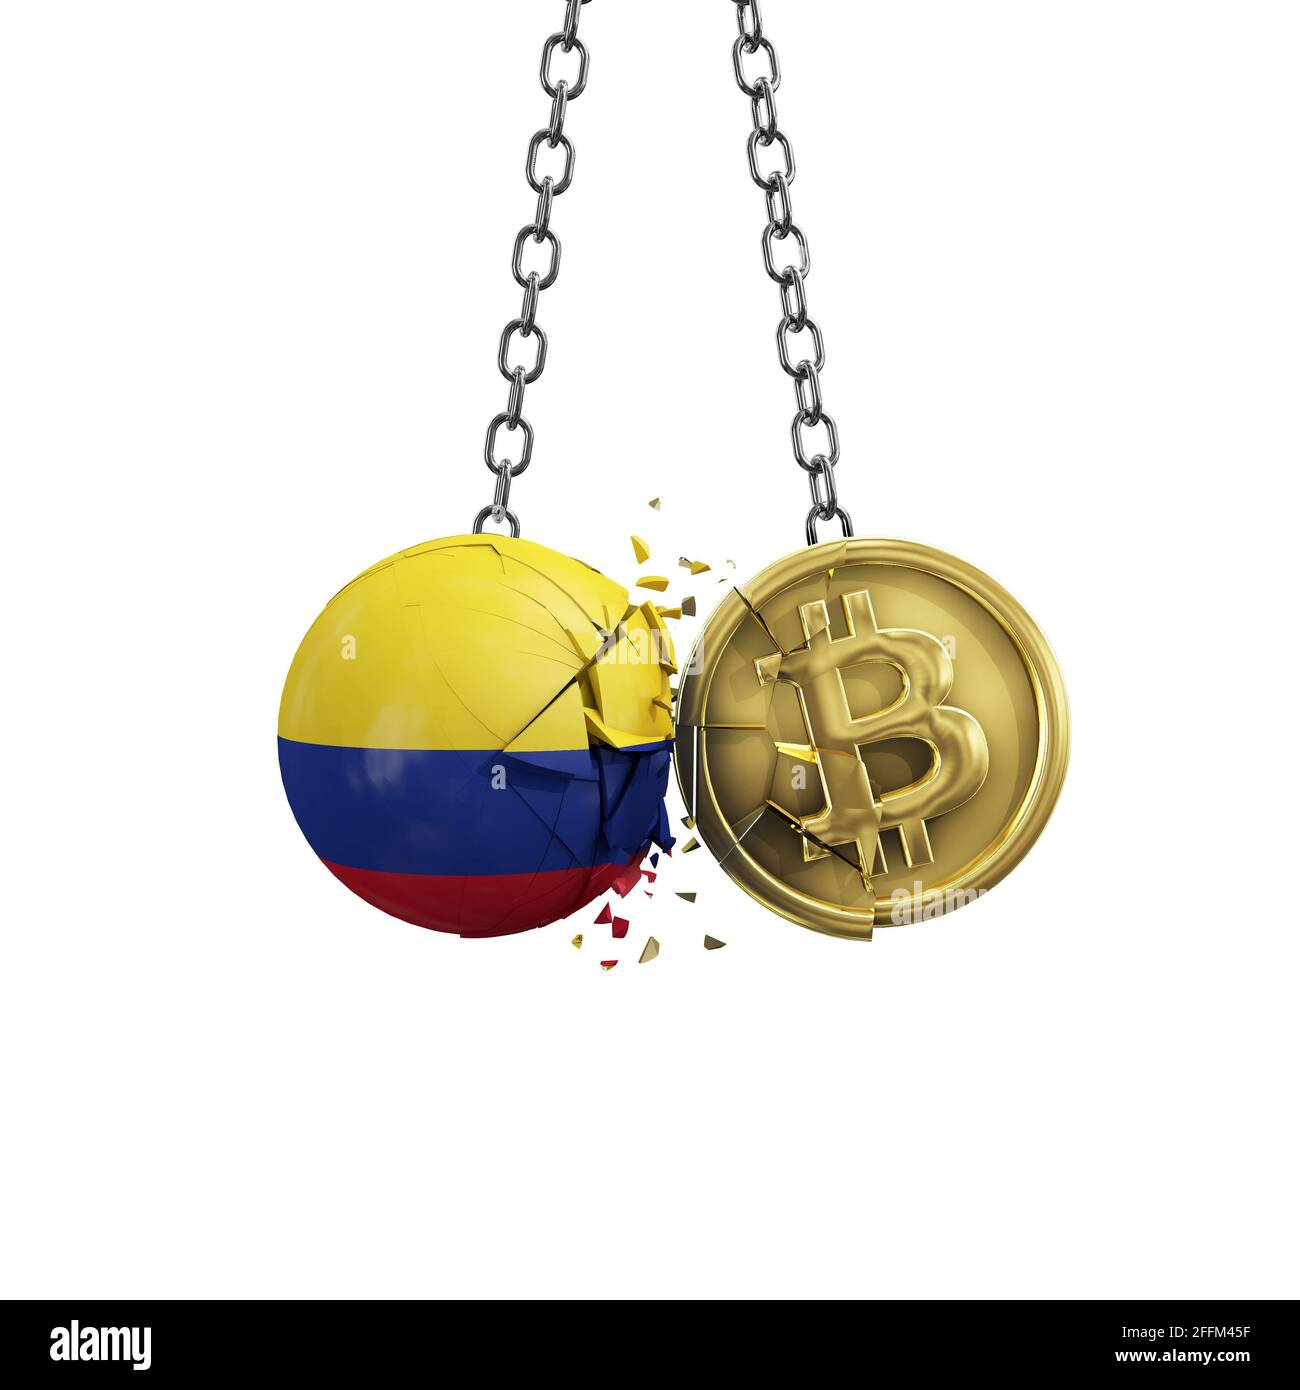 Colombia flag smashing into a gold bitcoin crypto coin. 3D Rendering Stock Photo